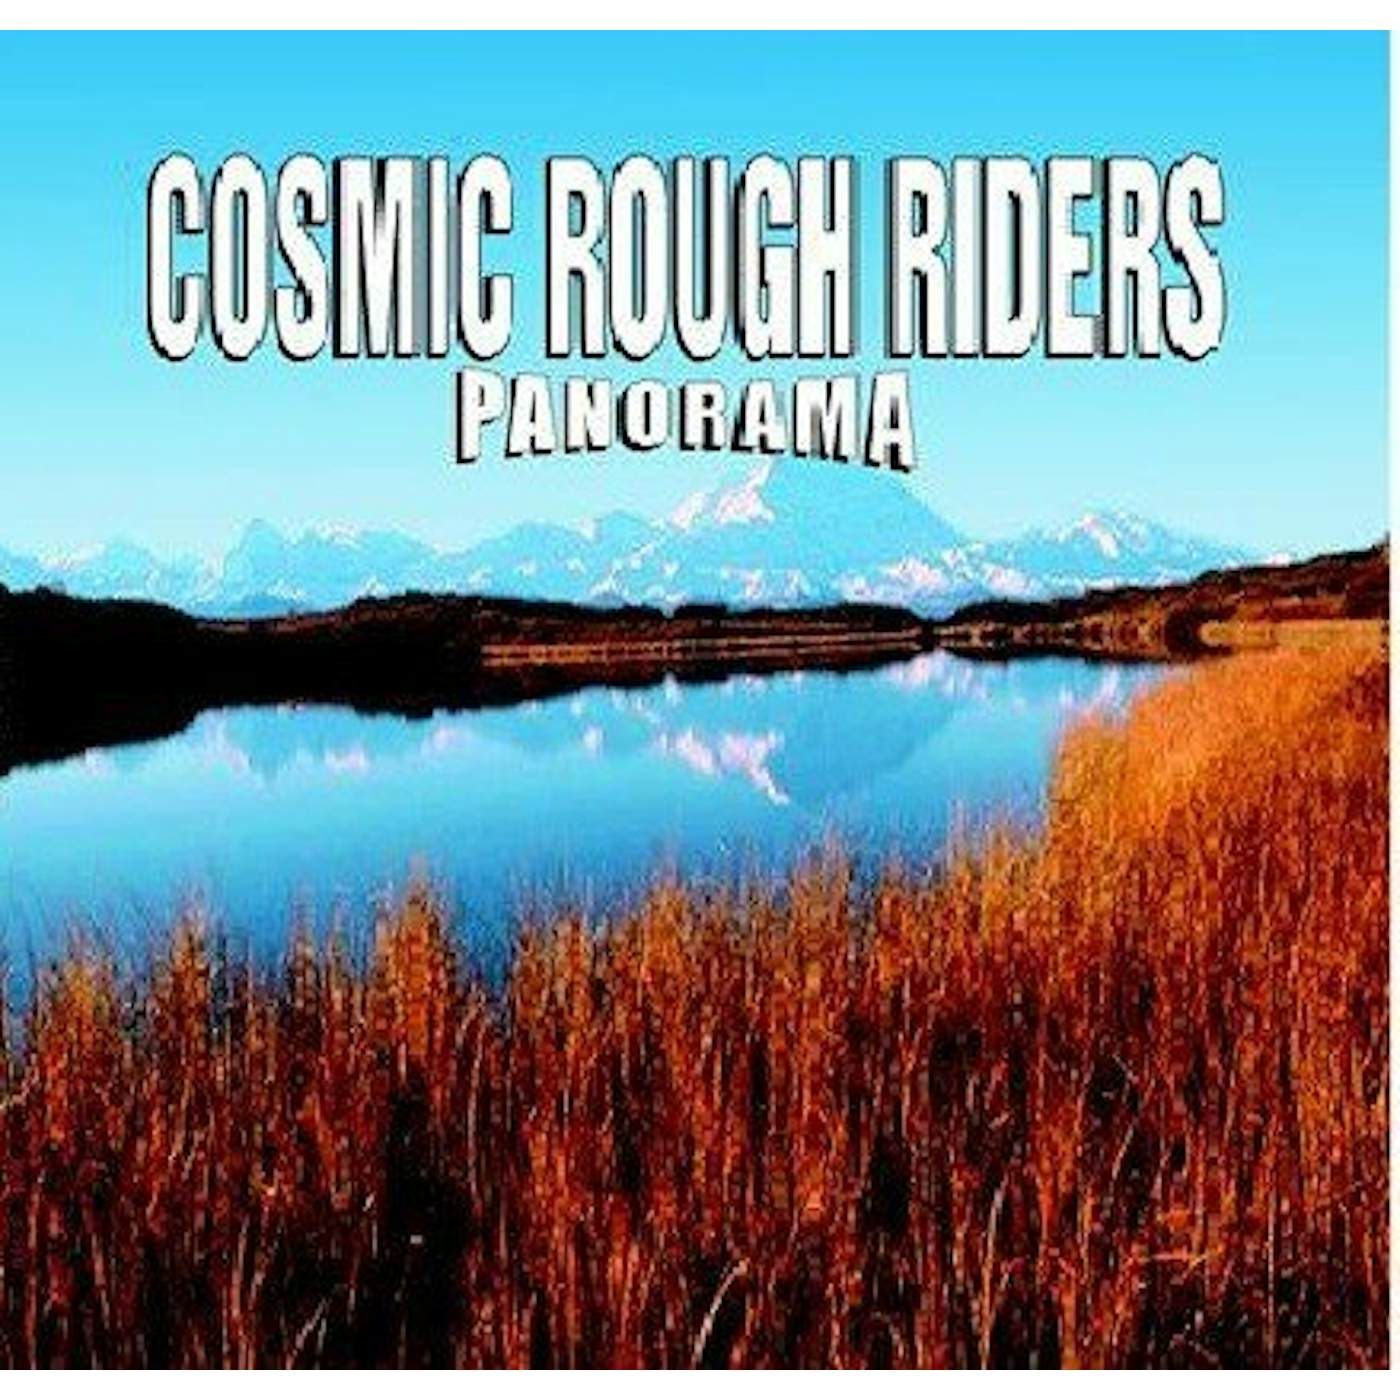 Cosmic Rough Riders Panorama Vinyl Record